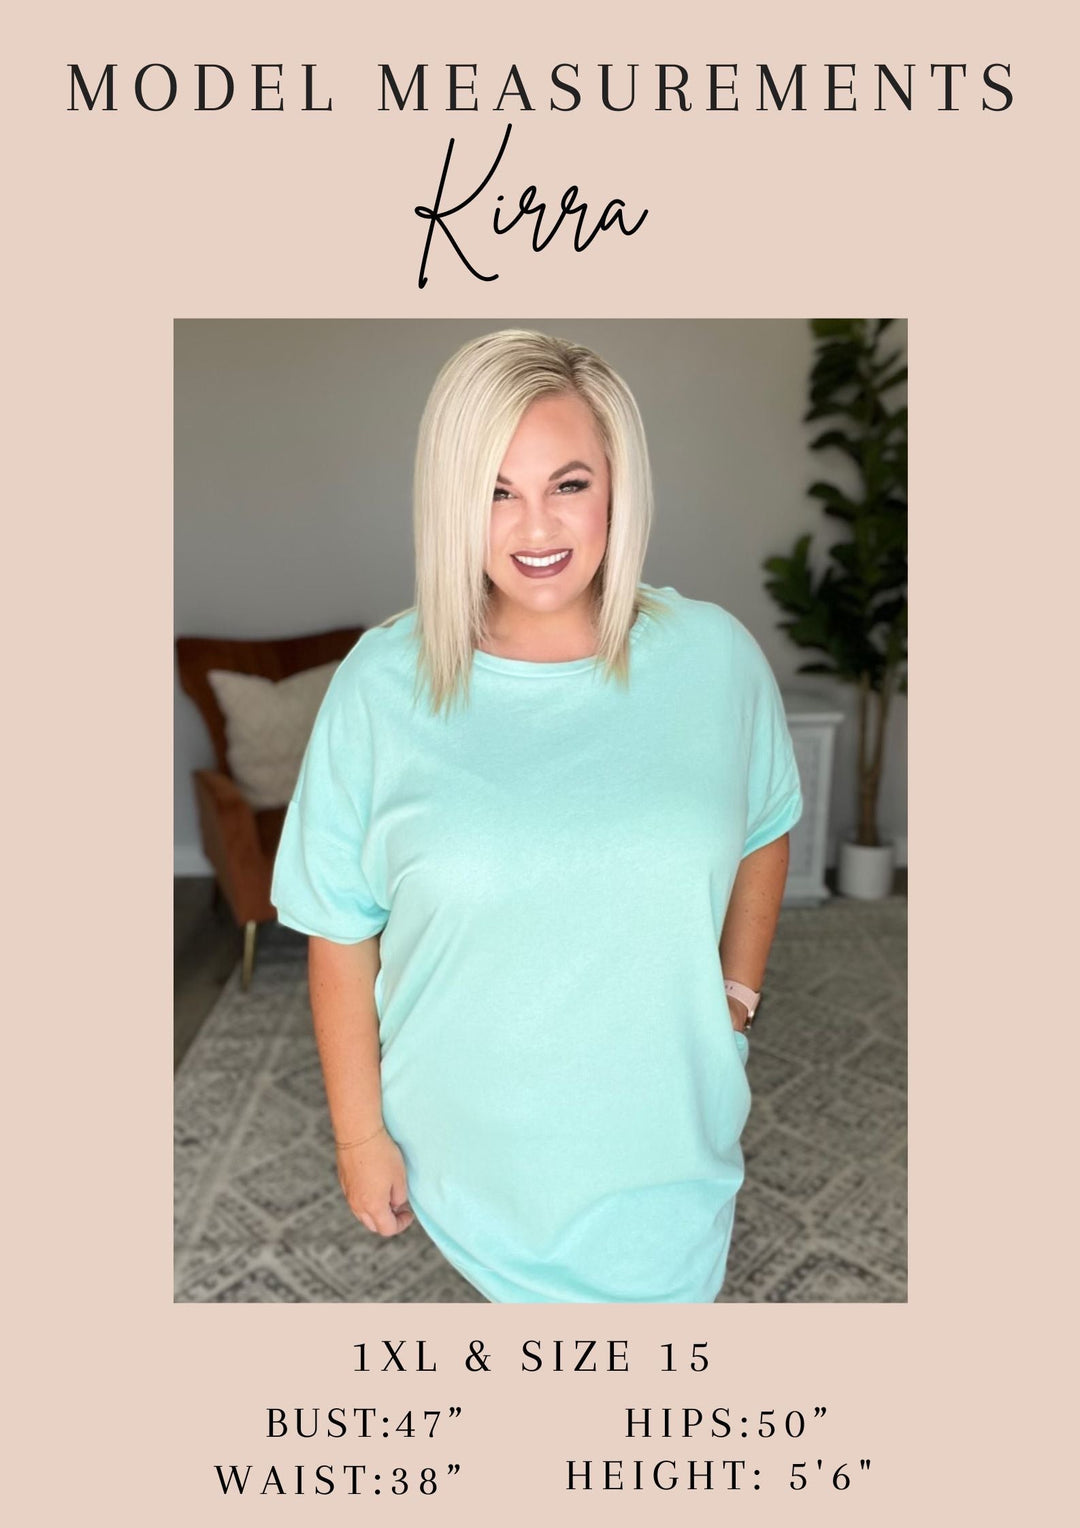 Judy Blue Lydia Mid Rise Vintage Raw Hem Skinny Jeans-Jeans-Krush Kandy, Women's Online Fashion Boutique Located in Phoenix, Arizona (Scottsdale Area)